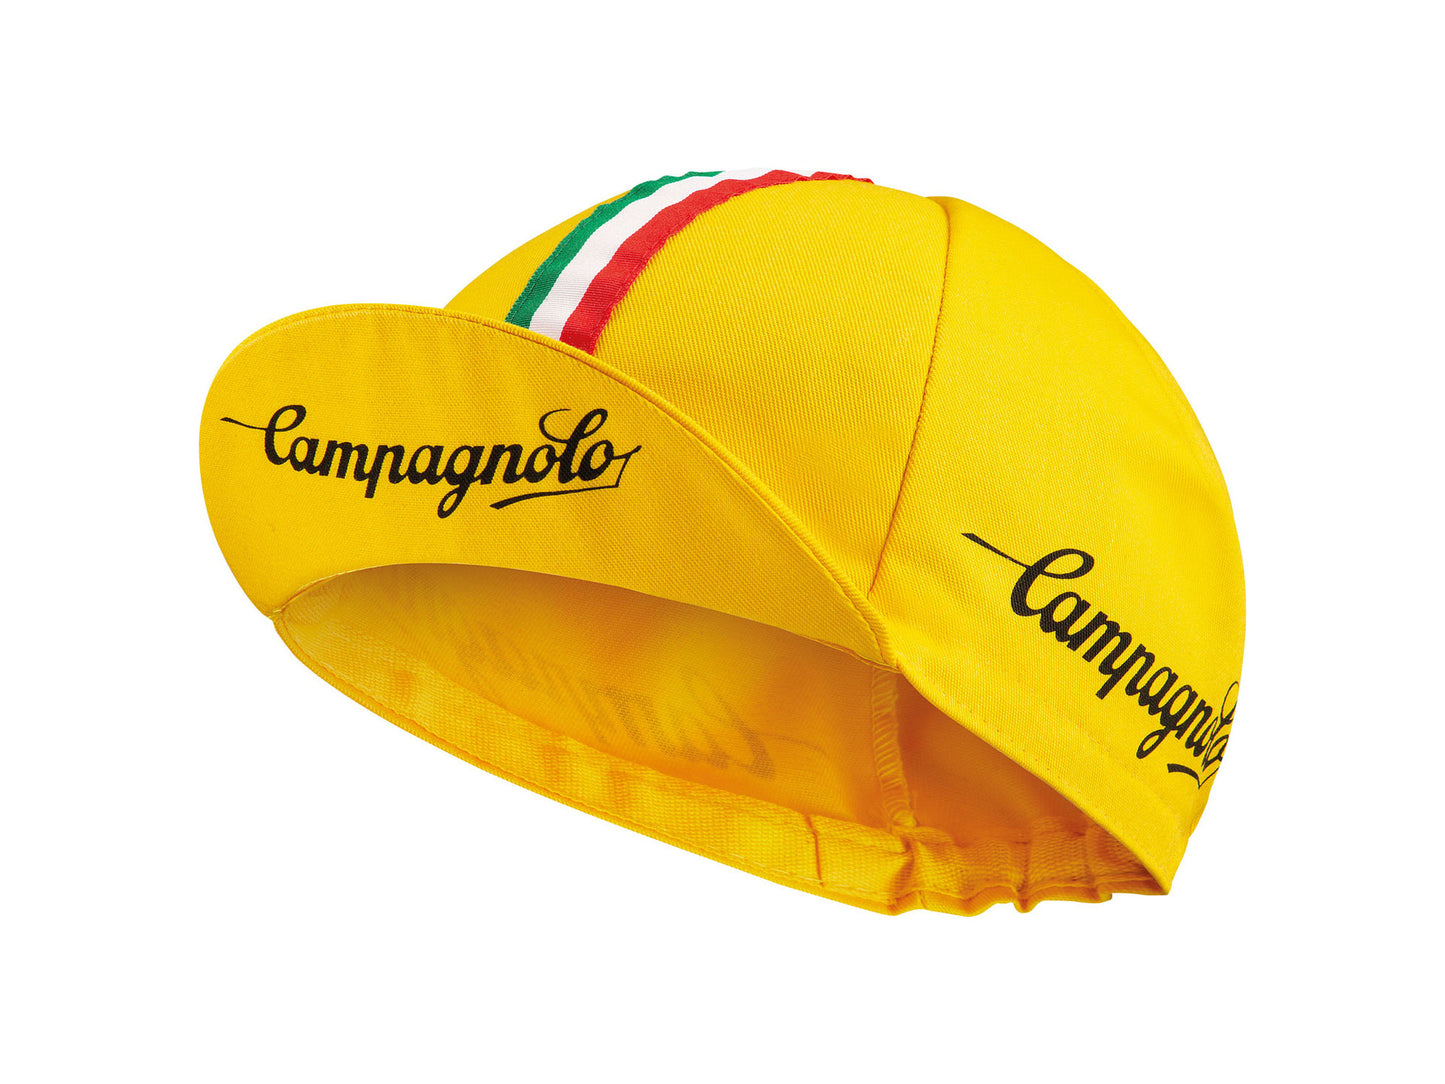 Campagnolo Classic Cycling  Cap Yellow w/Italian strips, one size